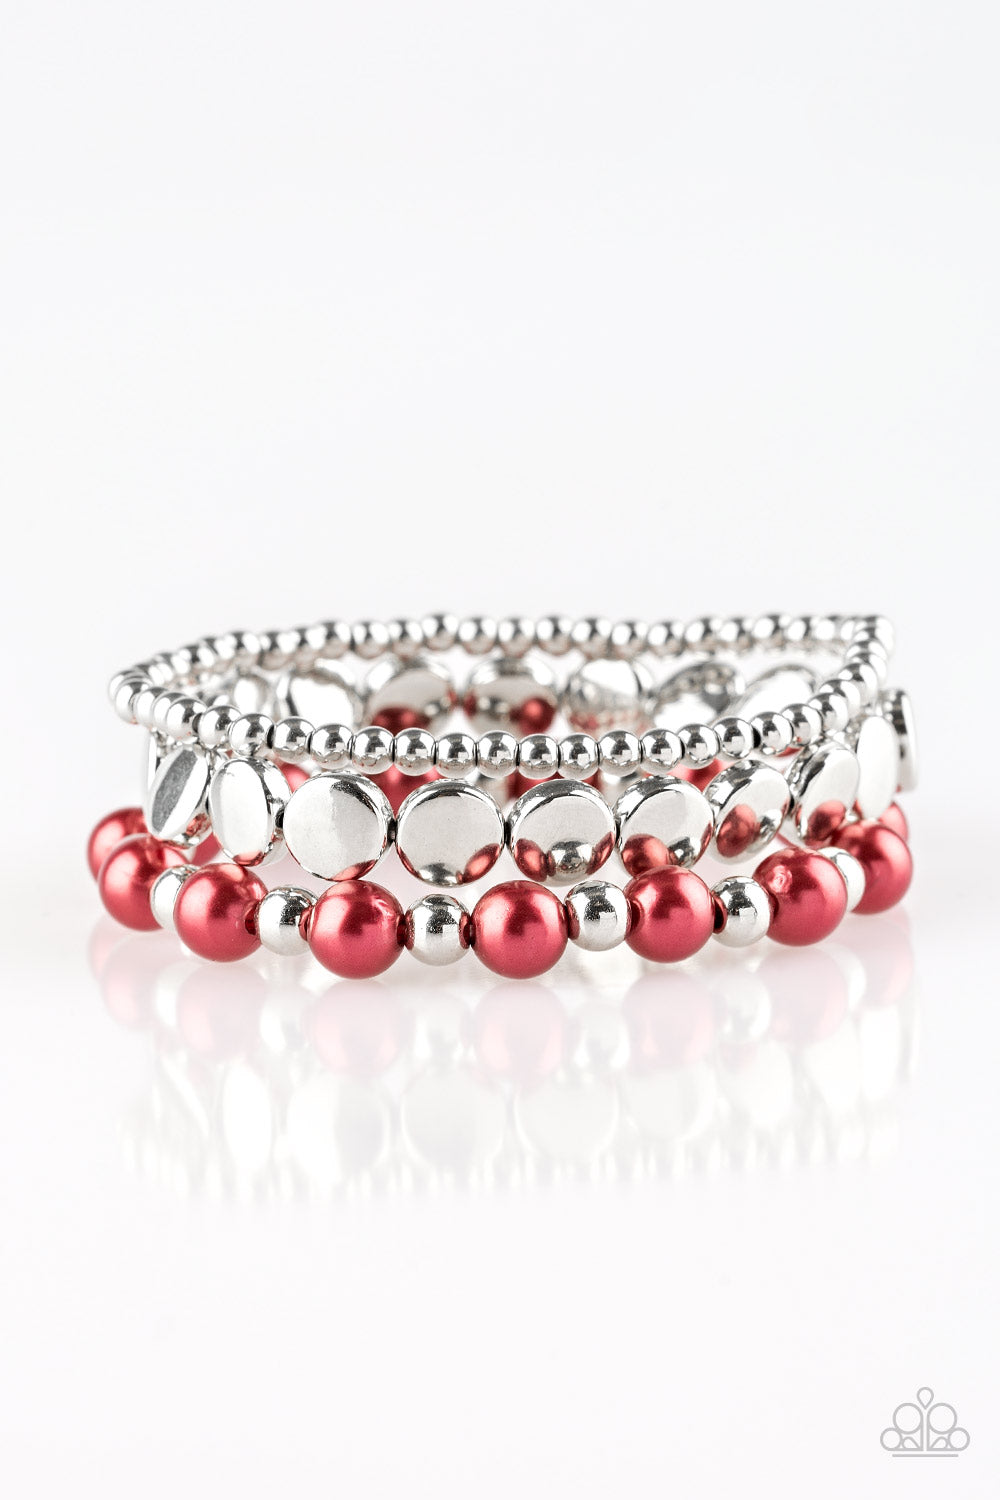 Paparazzi Girly Girl Glamour - Red Pearl Bracelet Set - Aliesblingbar